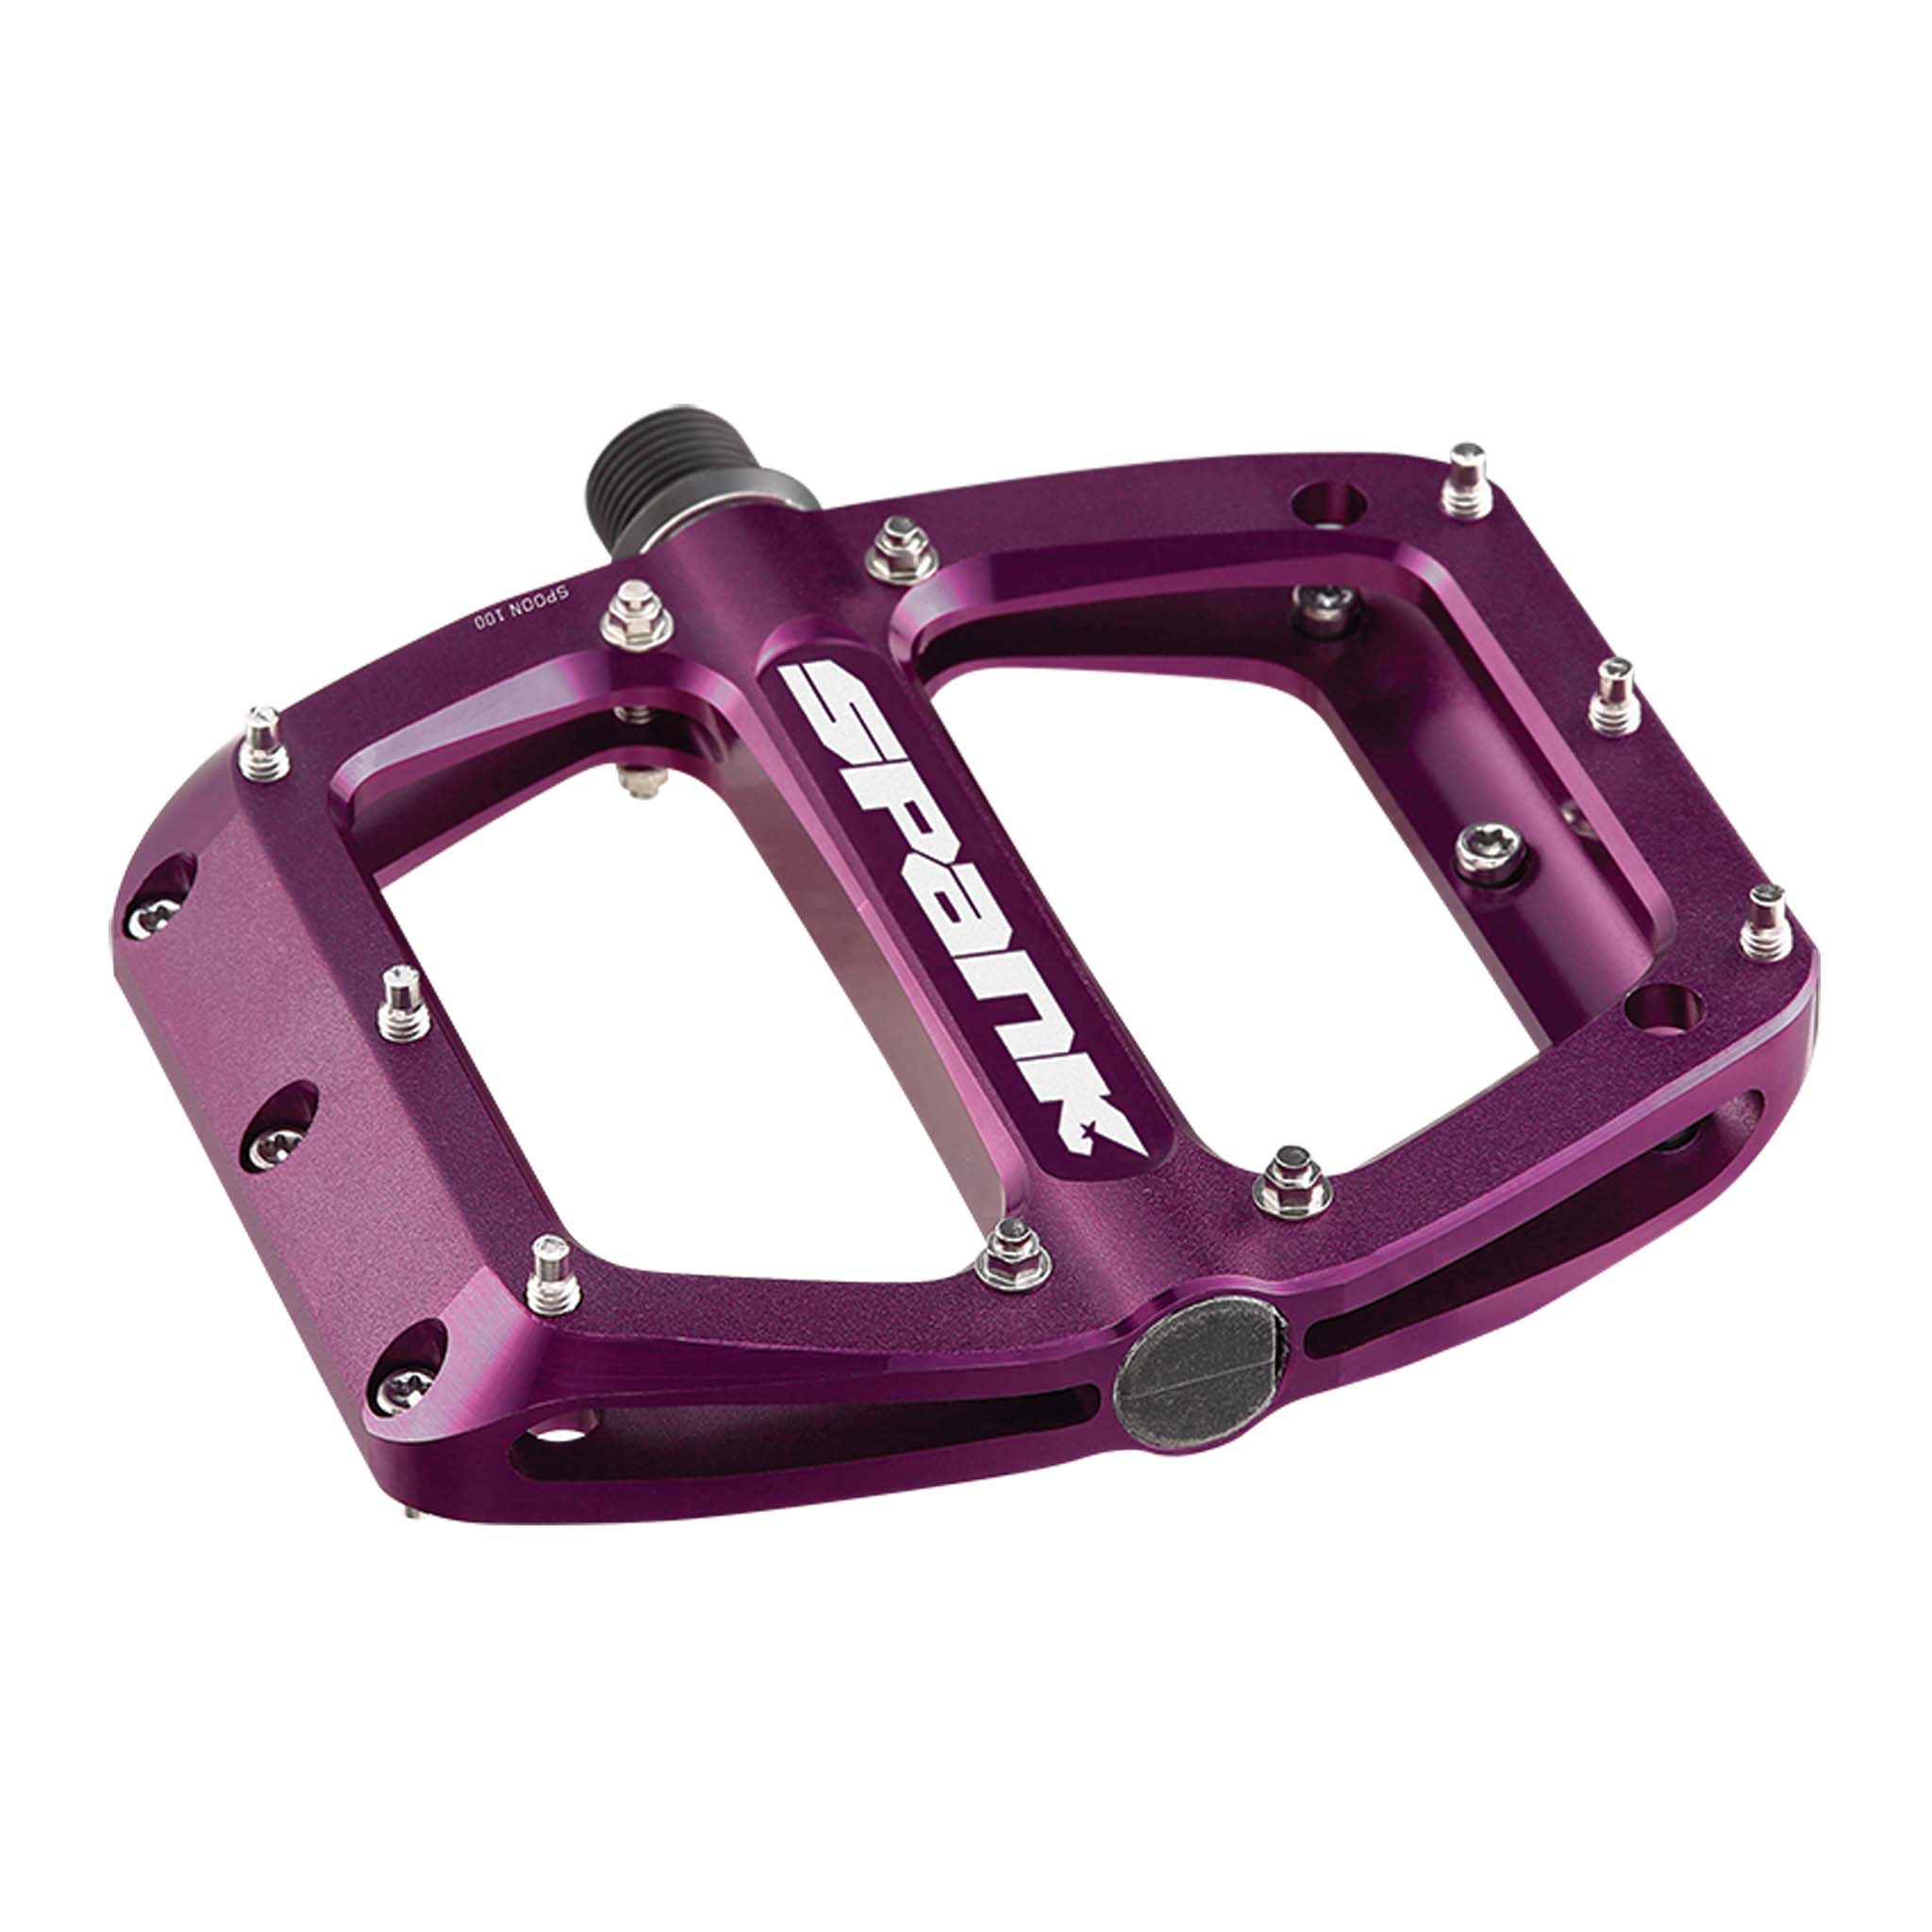 Spank Spoon 110 Pedals Purple